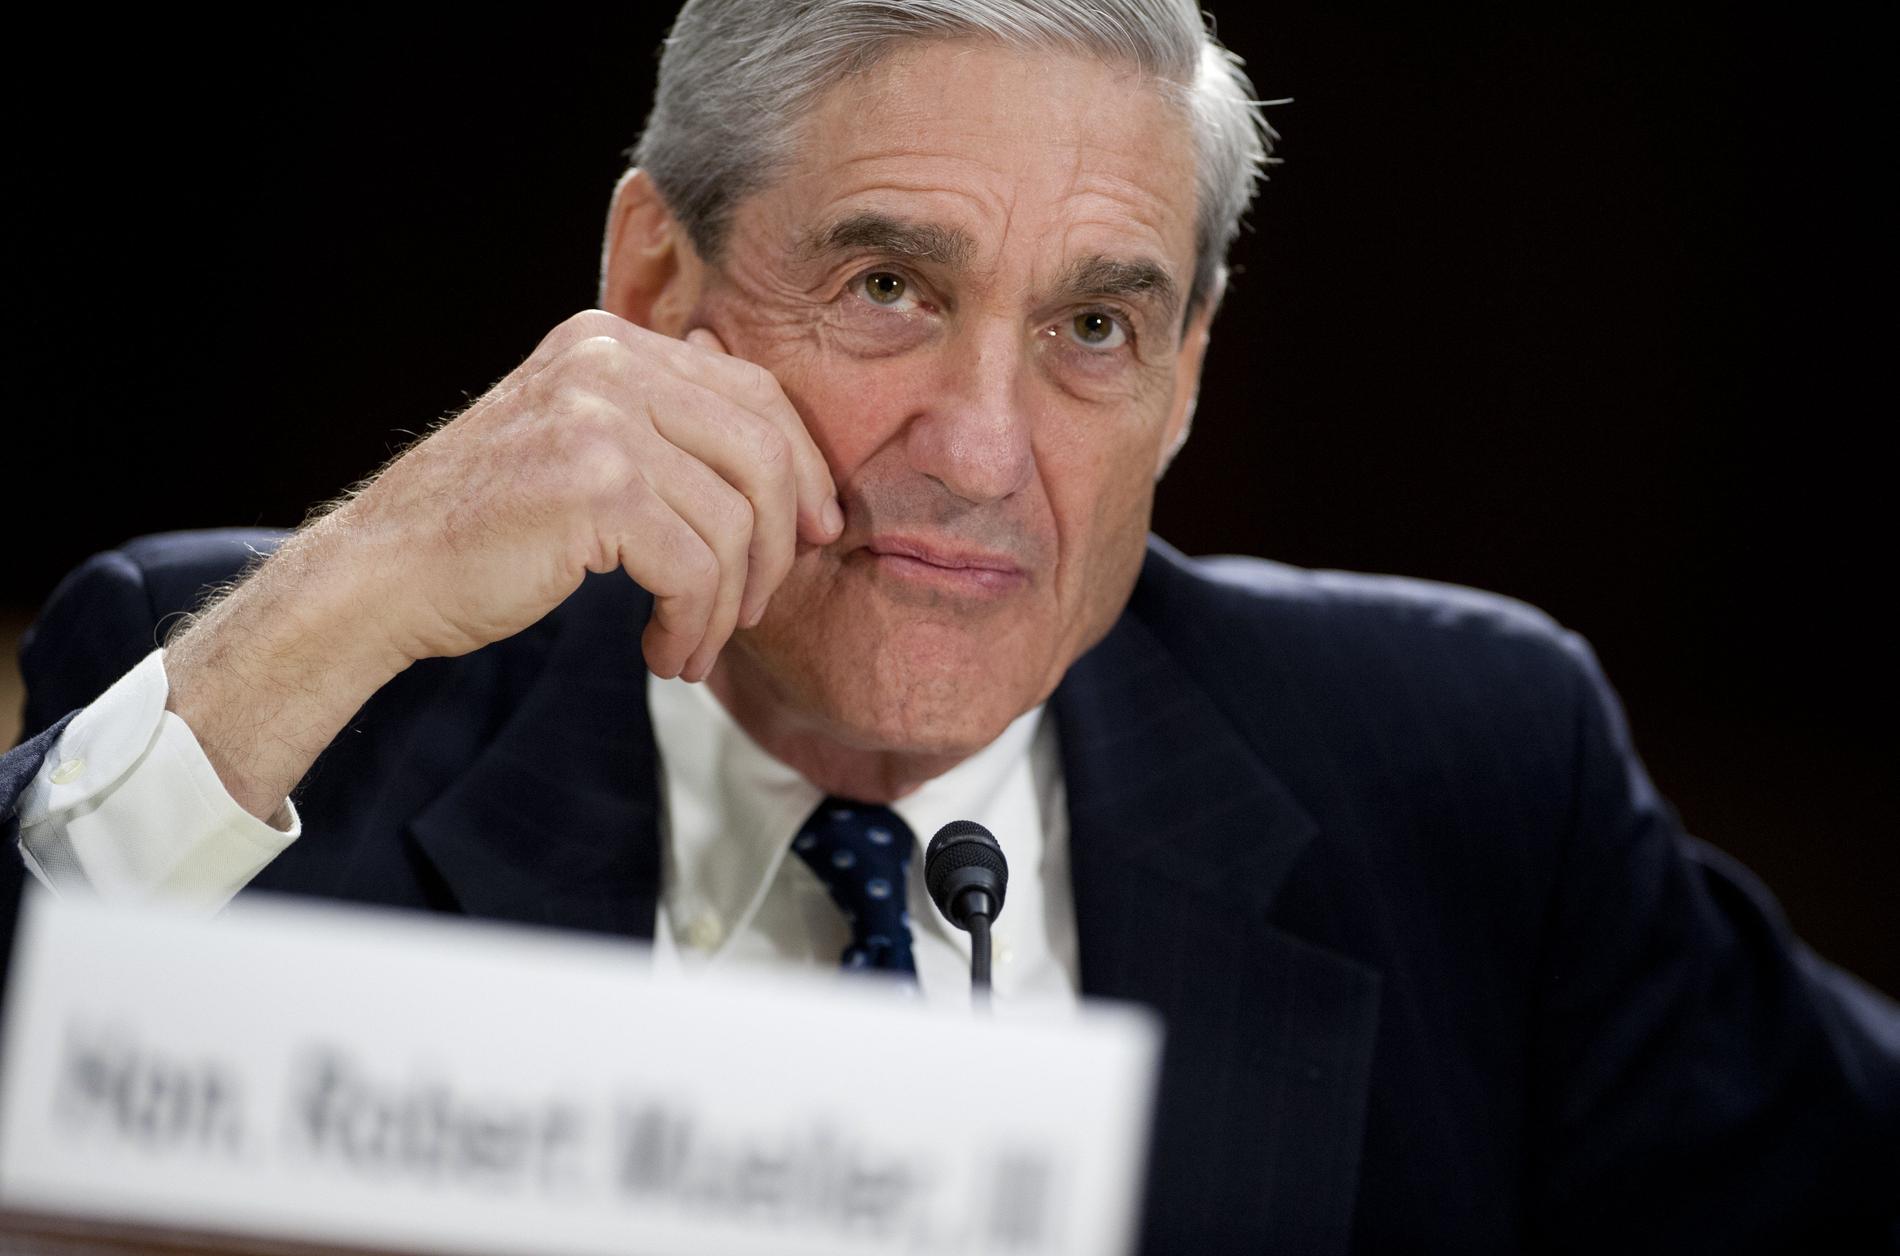 Särskilde åklagaren Robert Mueller utreddes rysskopplingar.